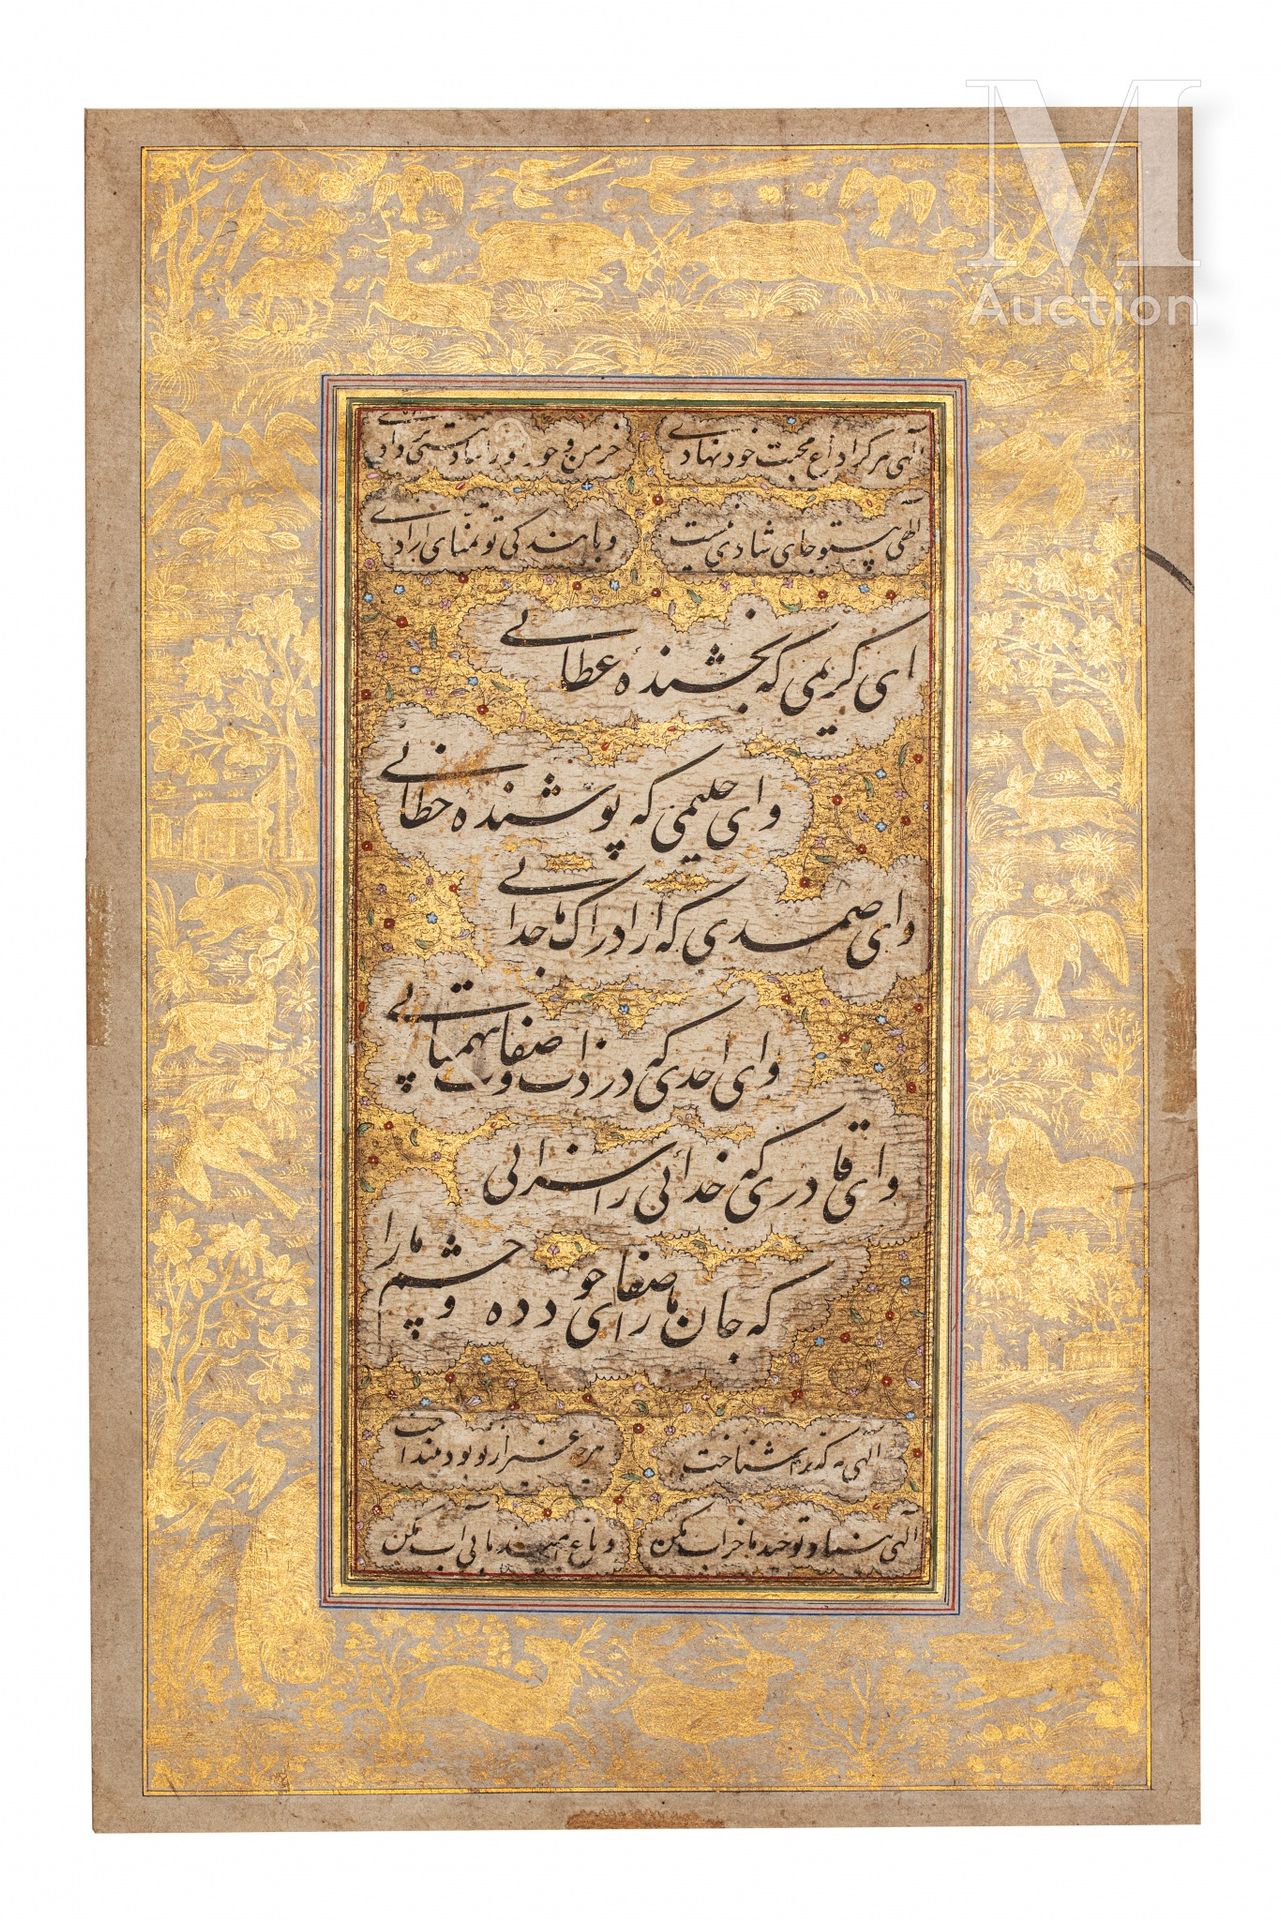 Calligraphie moghole 印度，18世纪

册页，由黑色墨水的纳斯塔利克书法组成，共六行，以两行为框架，书法更精细，保留在金色背景上的螺旋卷轴与&hellip;